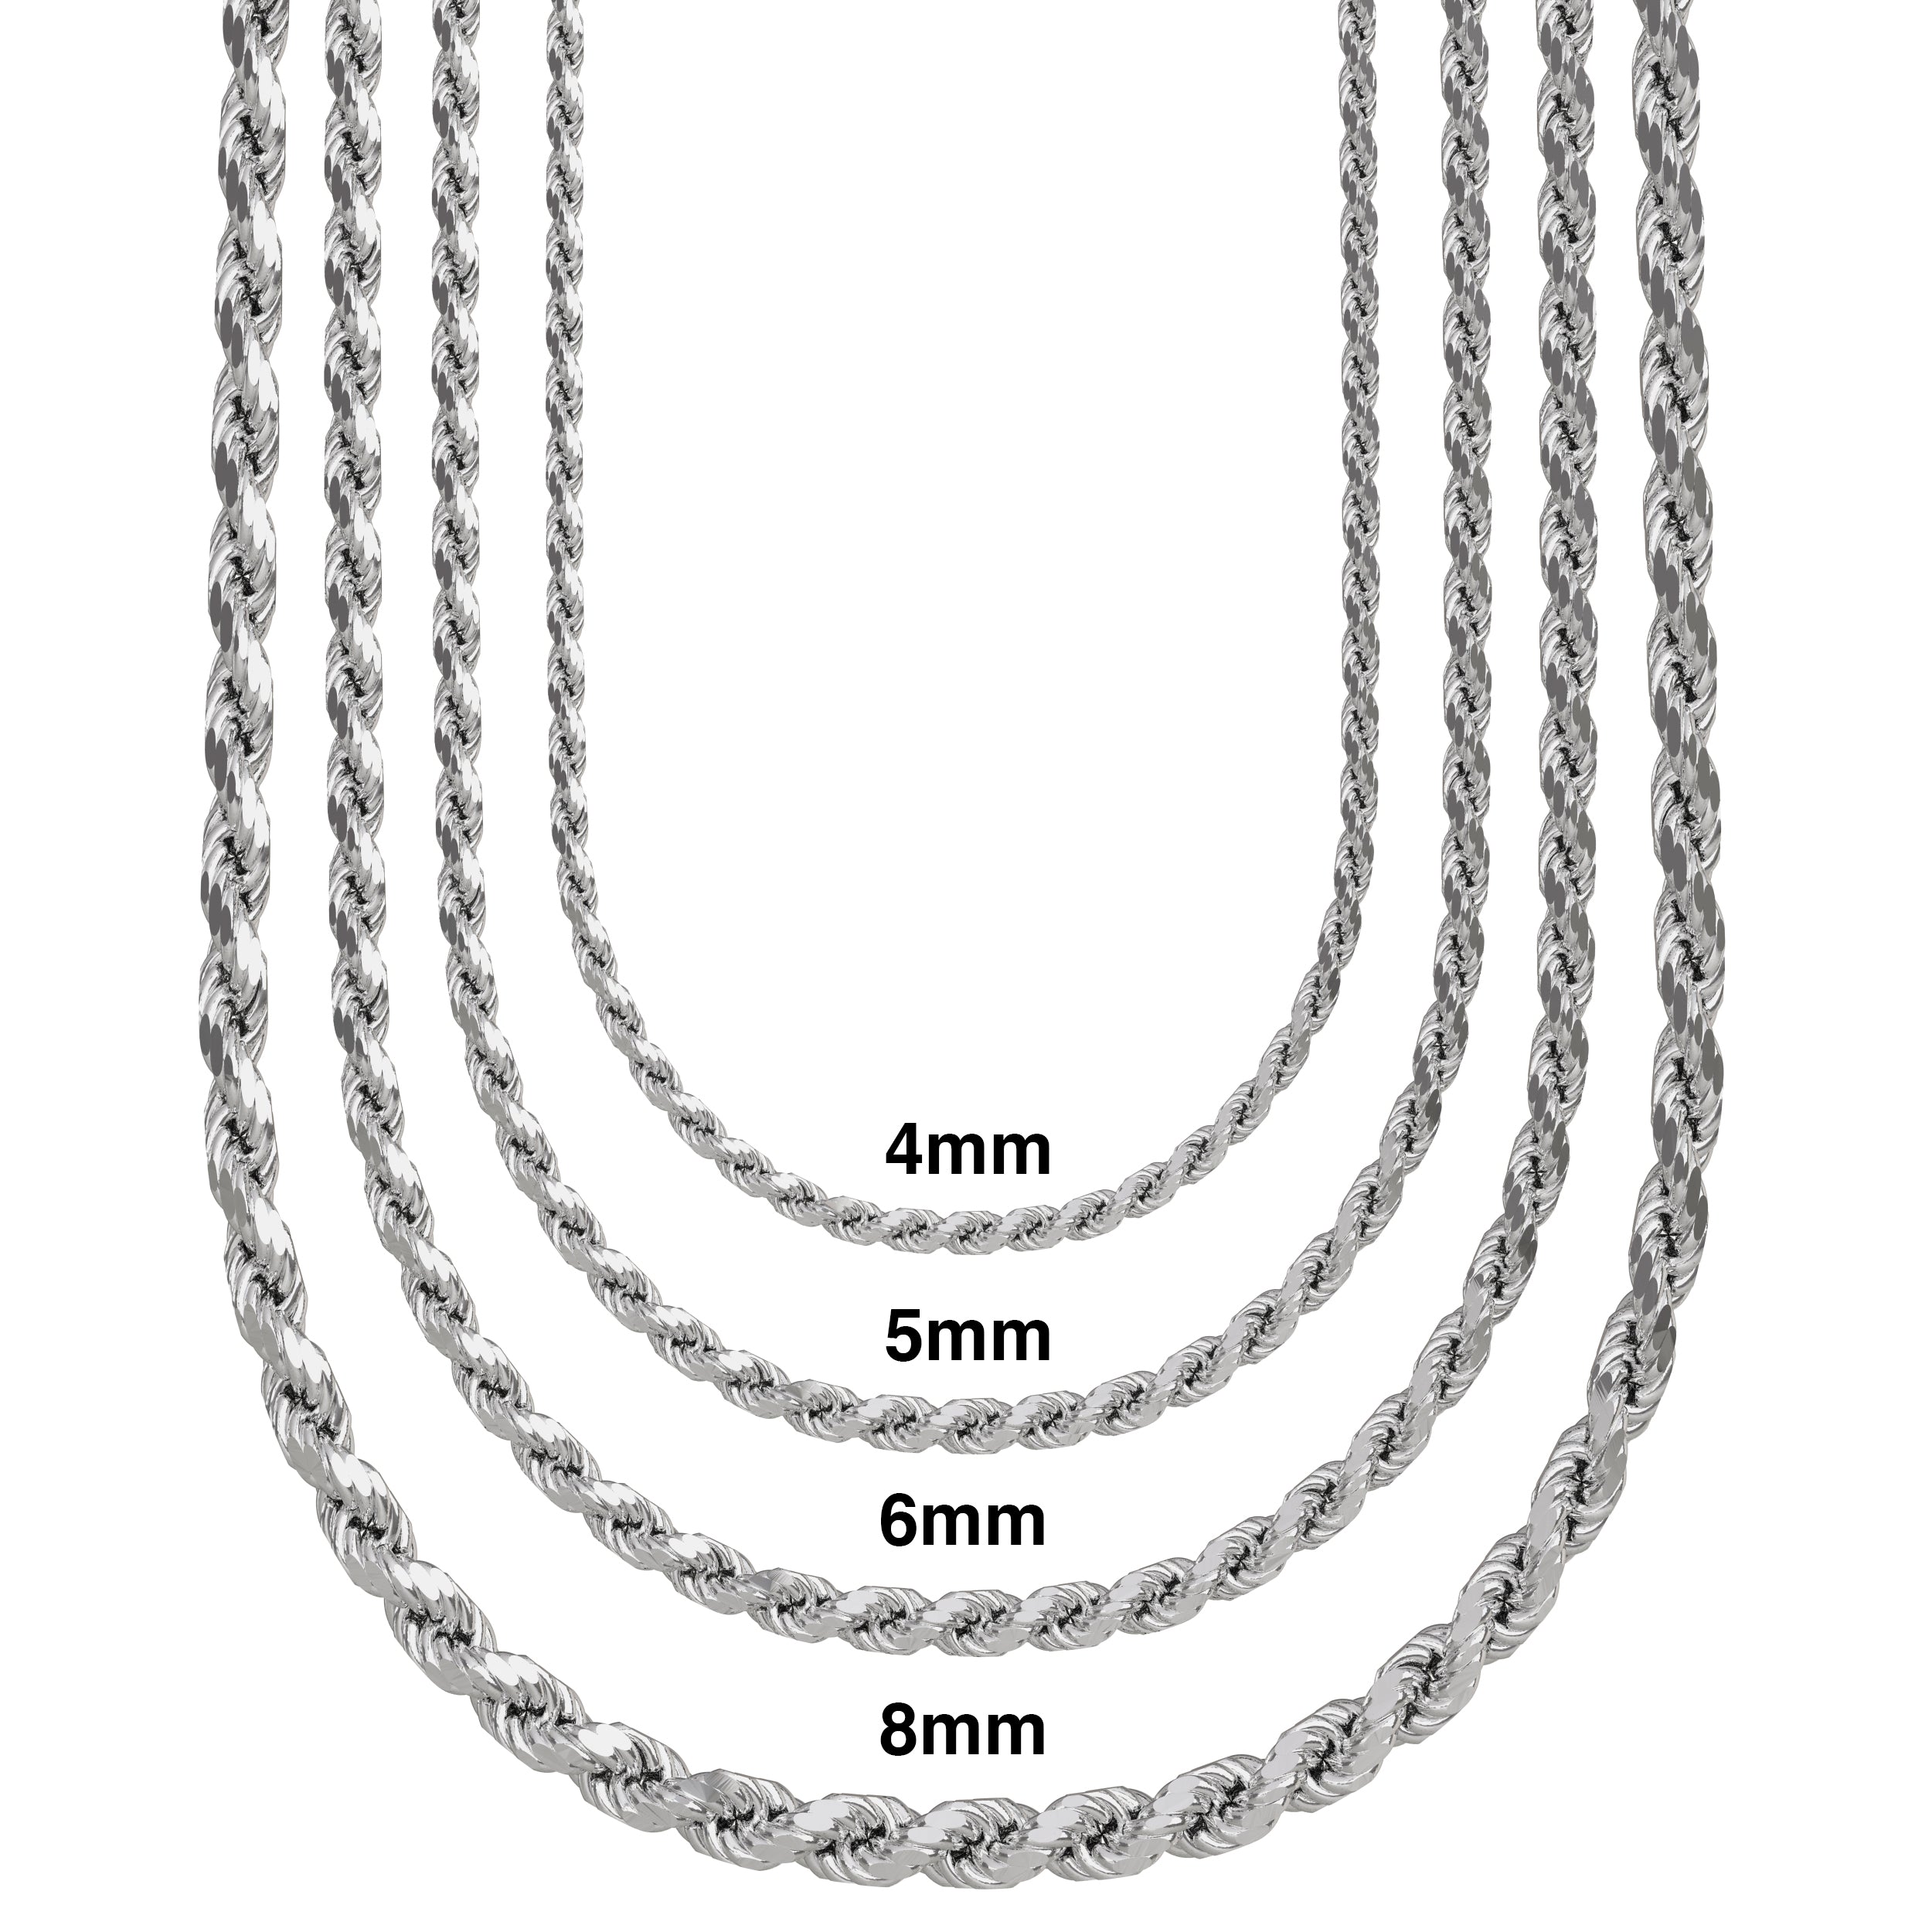 .925 Silver Rope Chain I Nautical Treasure Jewelry 22 / .925 Silver / Rope Chain by Nautical Treasure Jewelry